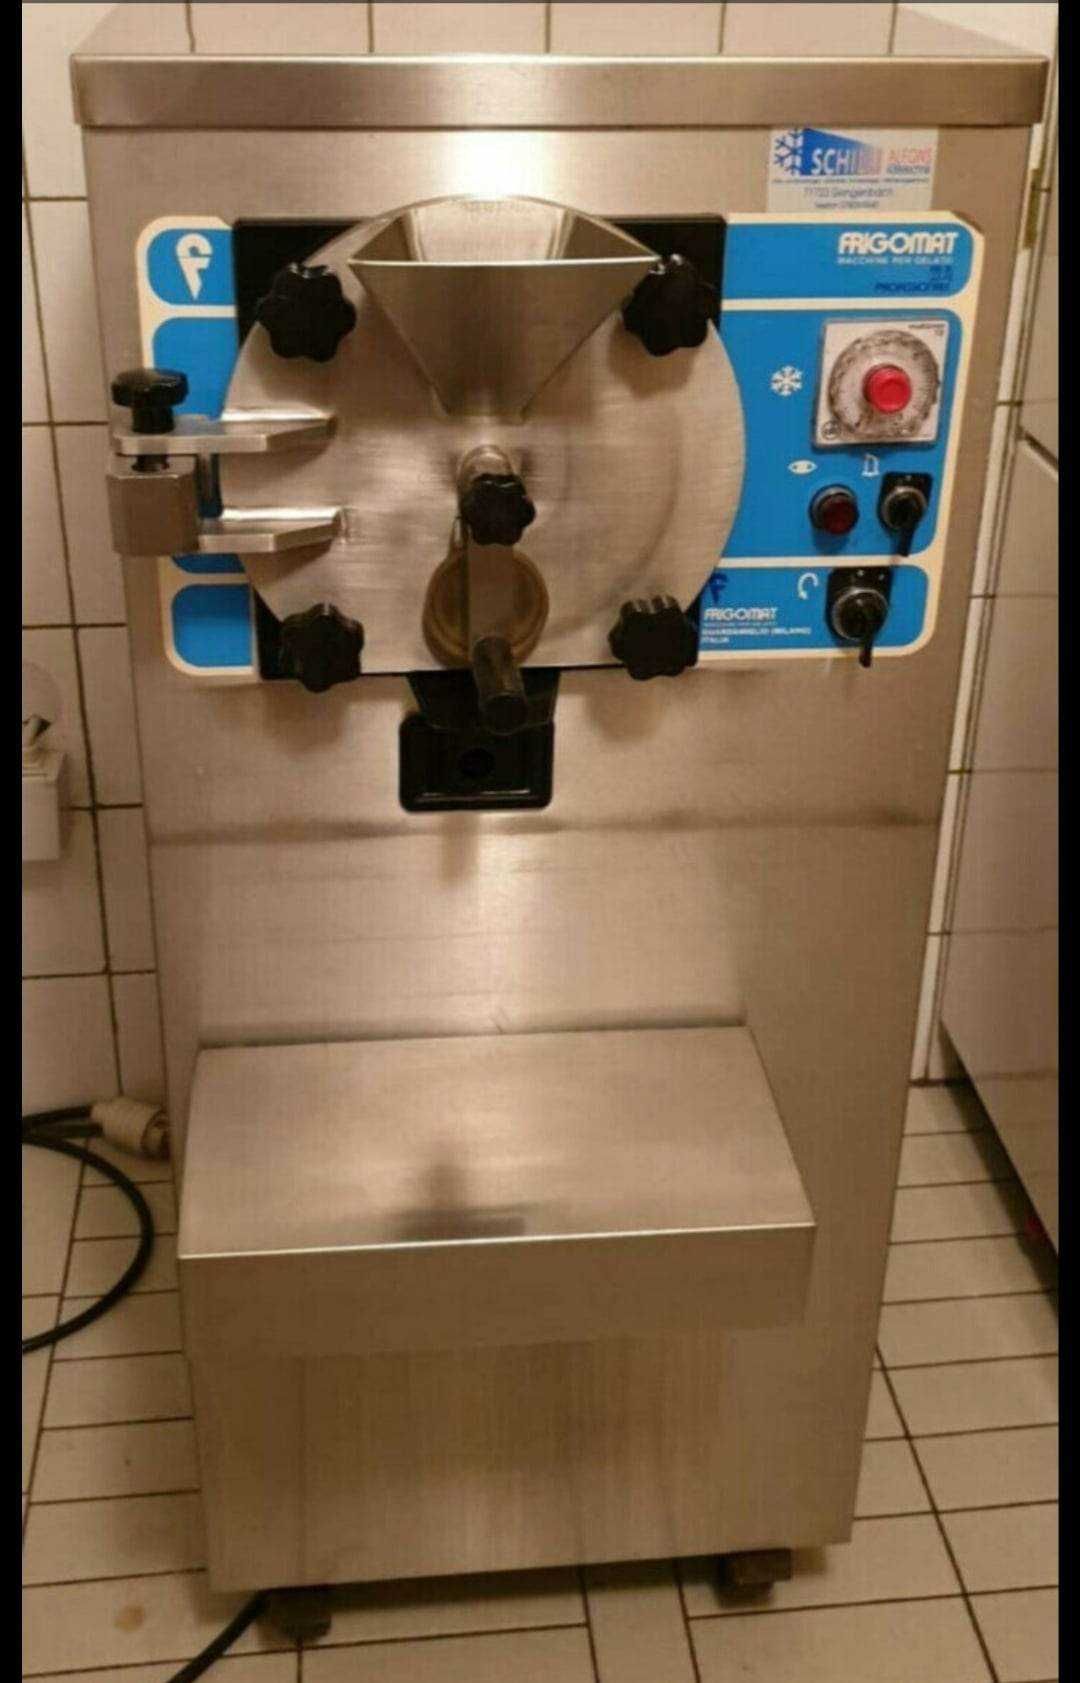 Професионална сладоледена машина с рецепта за сладолед.